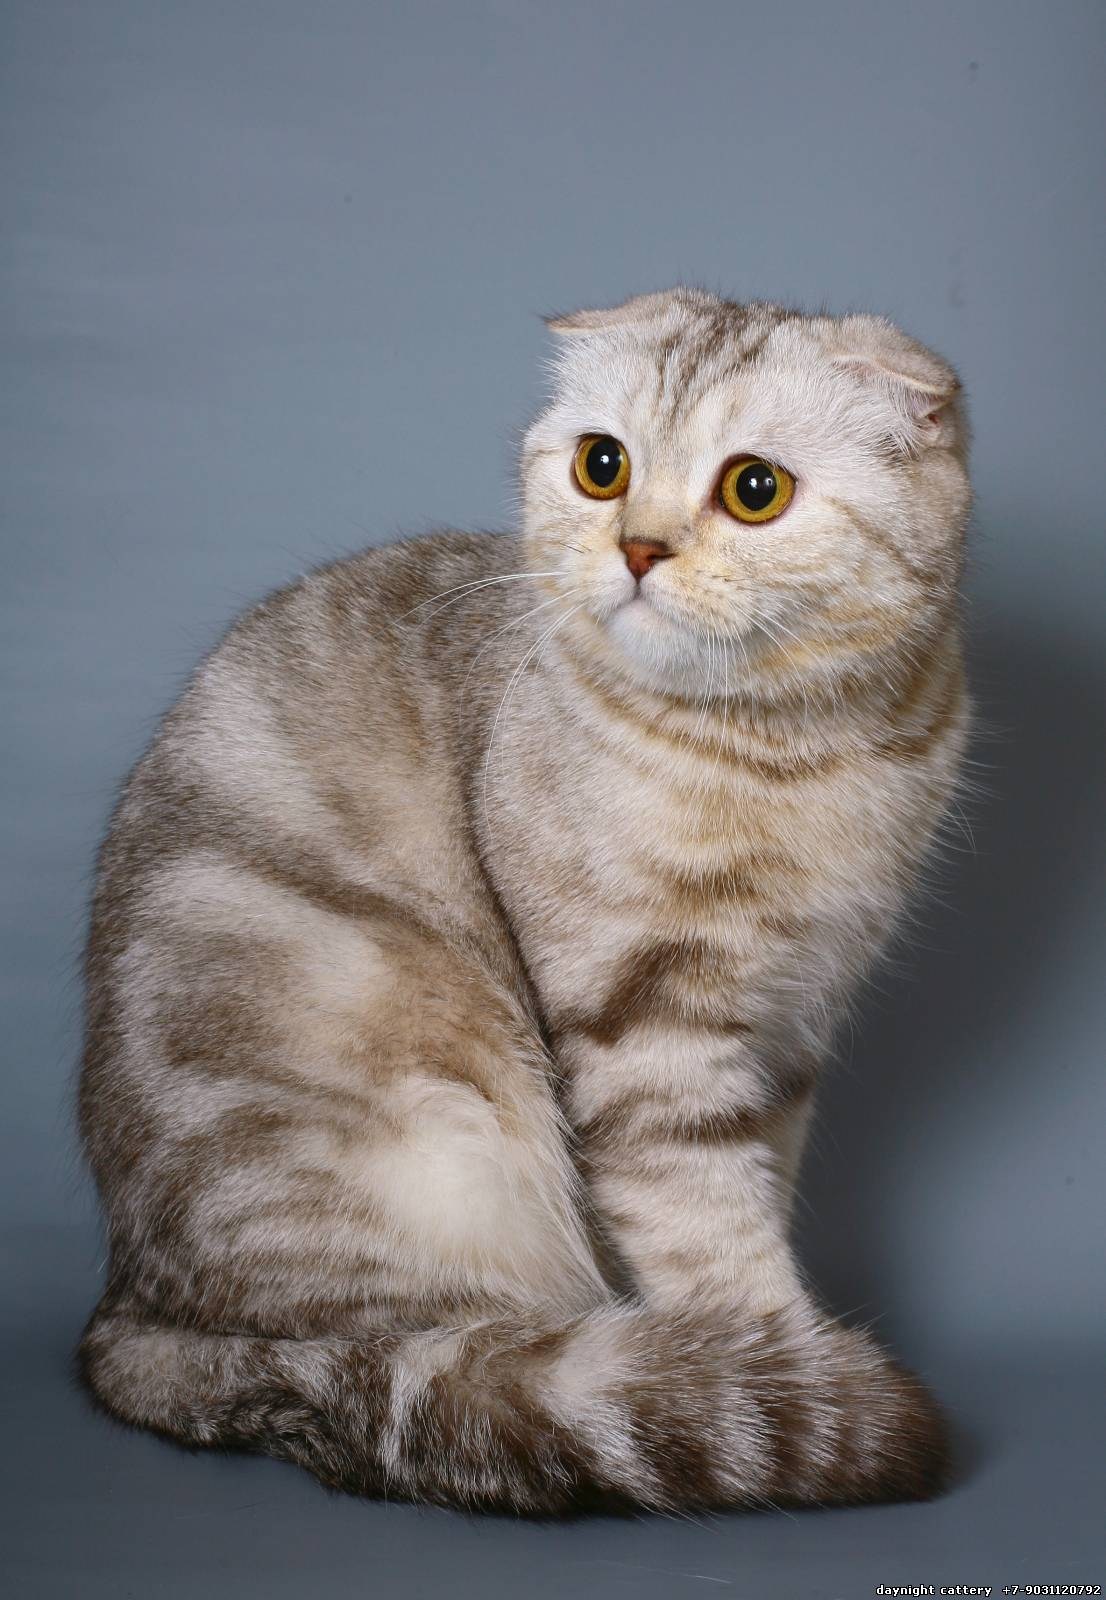 Фото вислоухой породы. Скоттиш-фолд Шотландская вислоухая кошка. Скоттиш-фолд Шотландская прямоухая. Шотландская кошка скоттиш фолд. Шотландская вислоухая (или скоттиш-фолд).